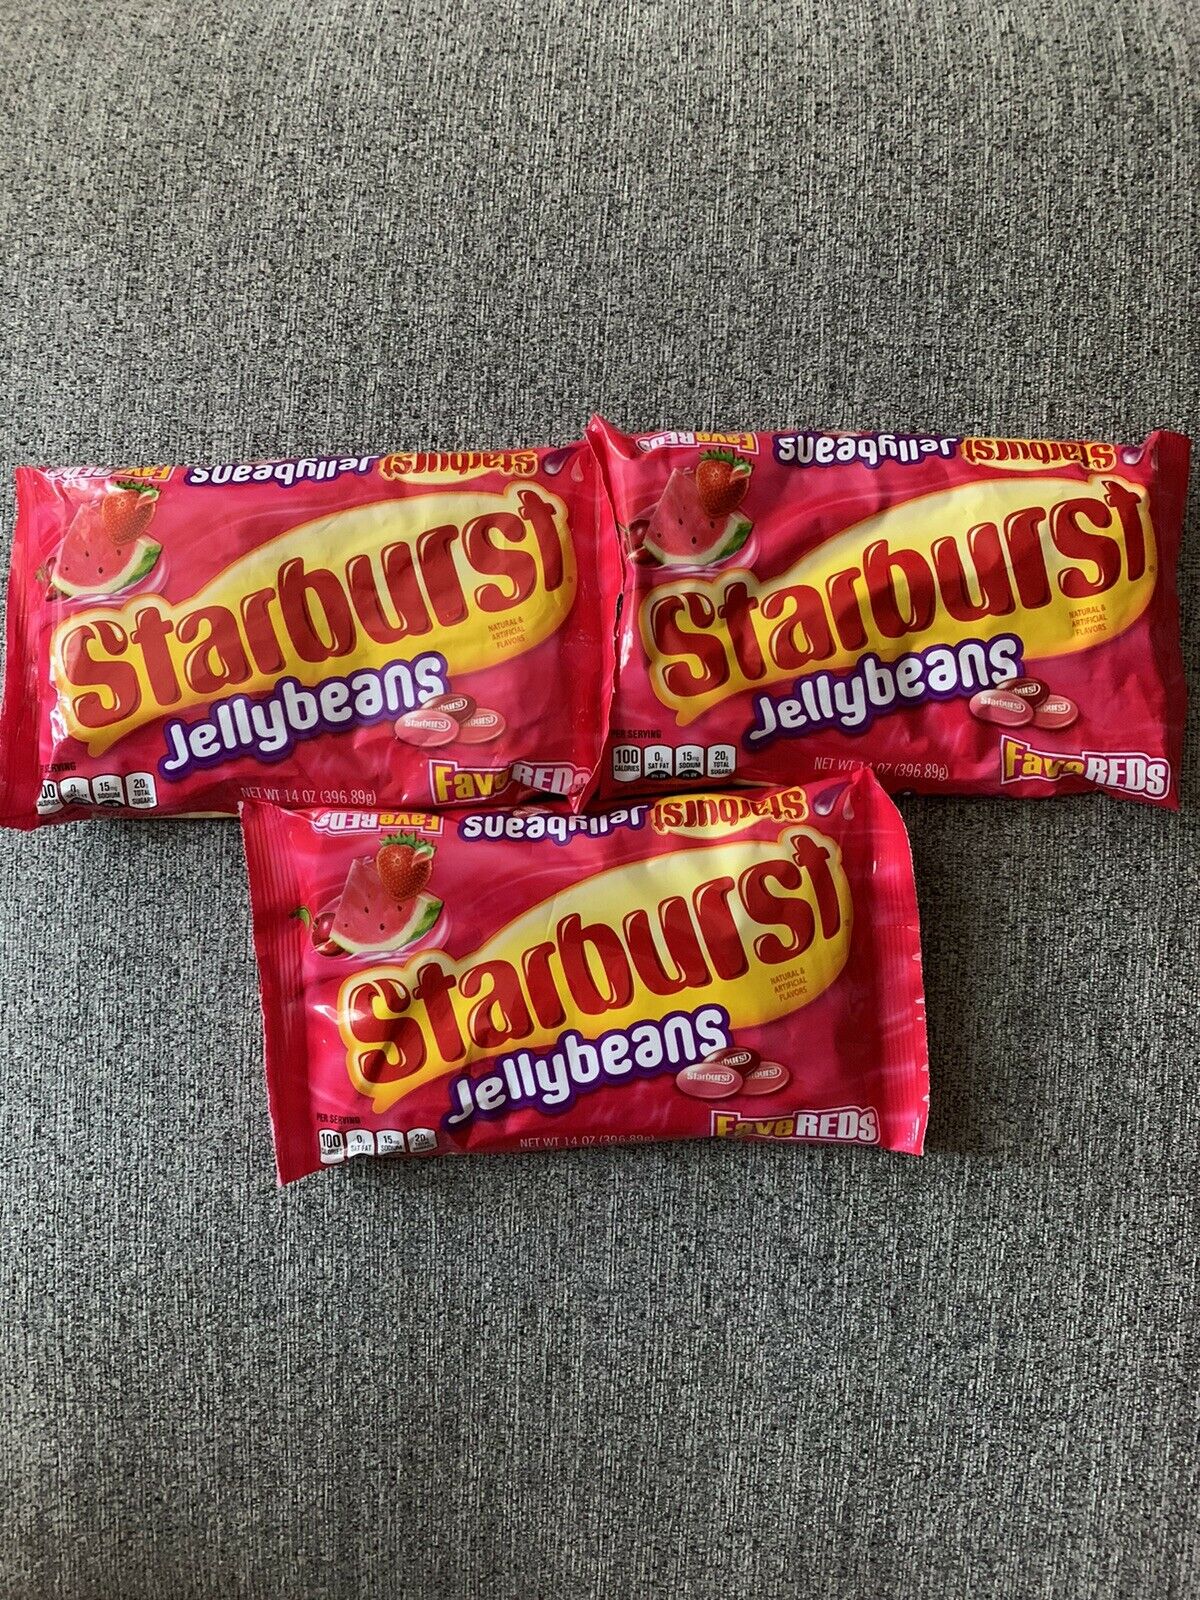 Starburst Jellybeans FaveREDs, 3 Pack 14Oz Per Bag, Red Jellybean Candy EXP 4/23